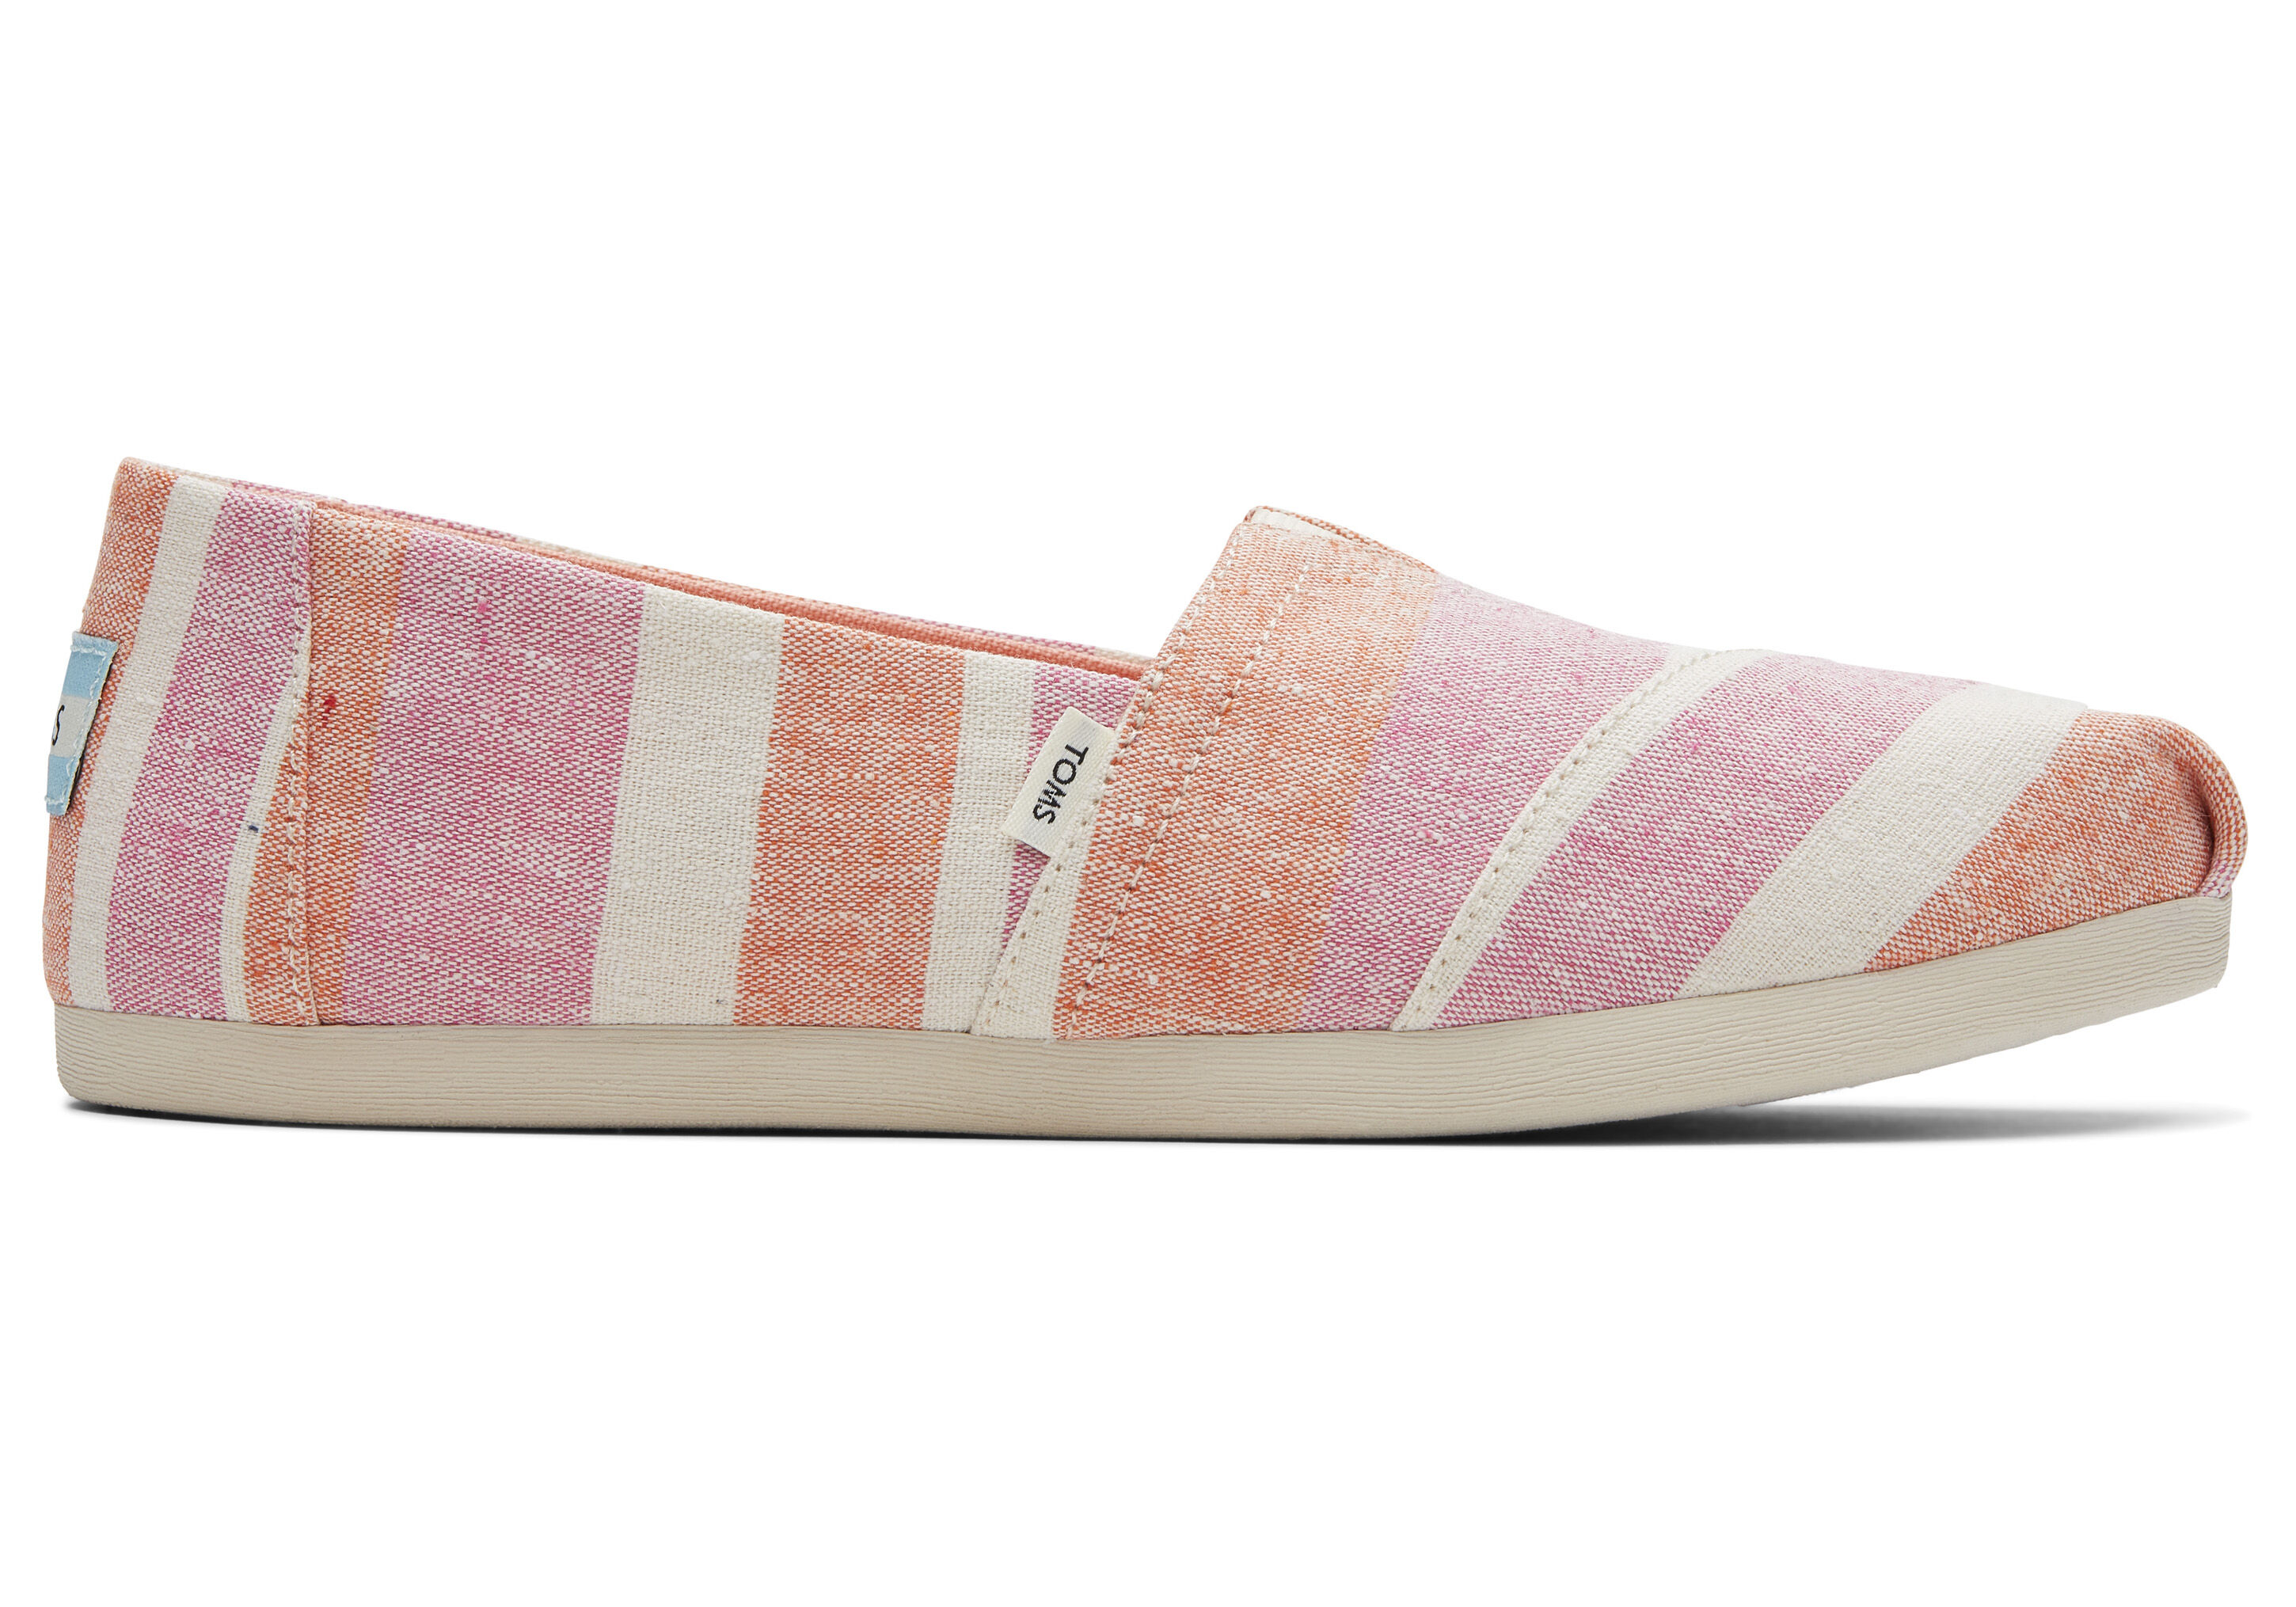 TOMS Women's Pink/Multi Fuchsia Rose Wide Stripe Alpargatas Shoes - Size: 6.5